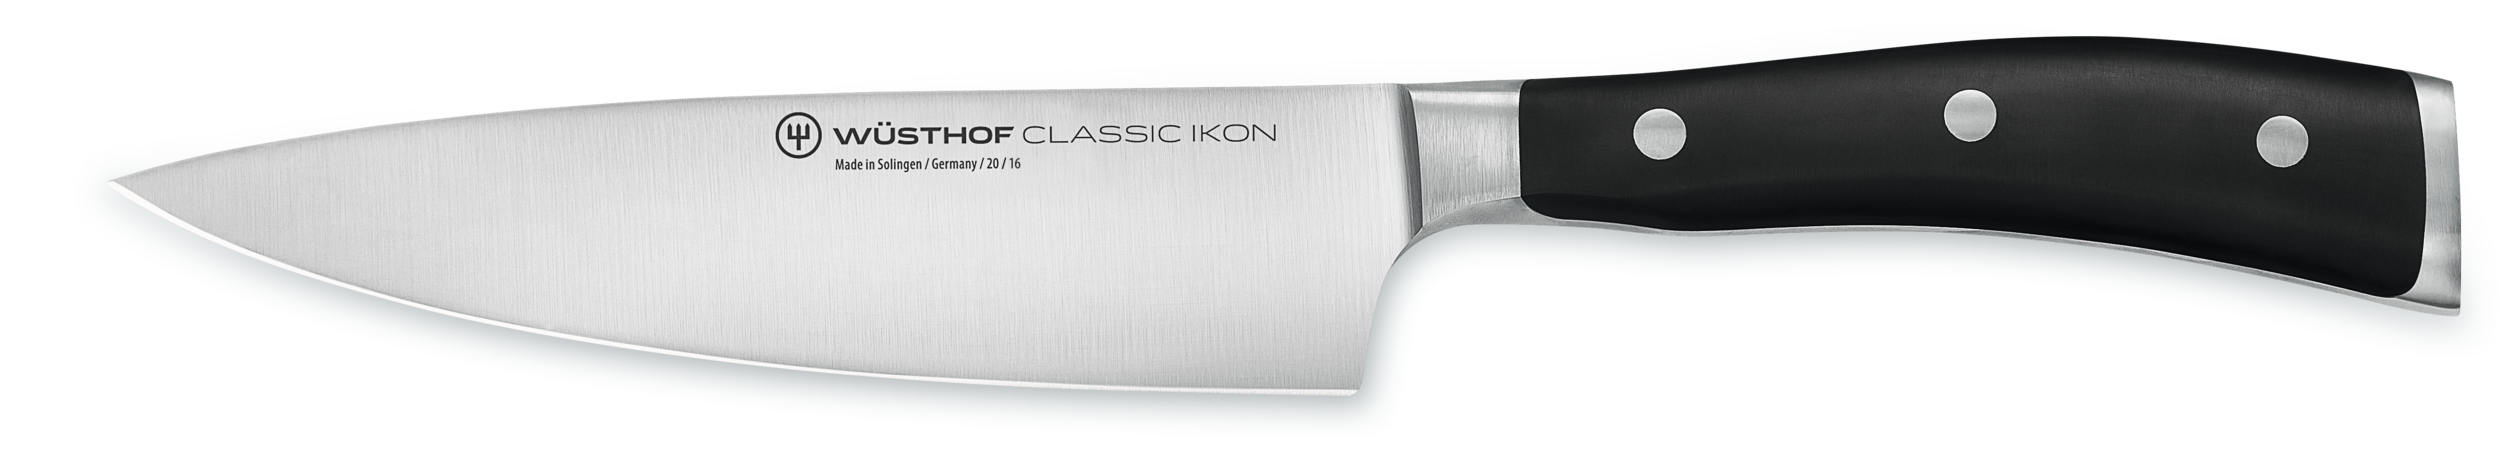 Wusthof Classic Ikon Black Chef's Knife 16cm 1040330116